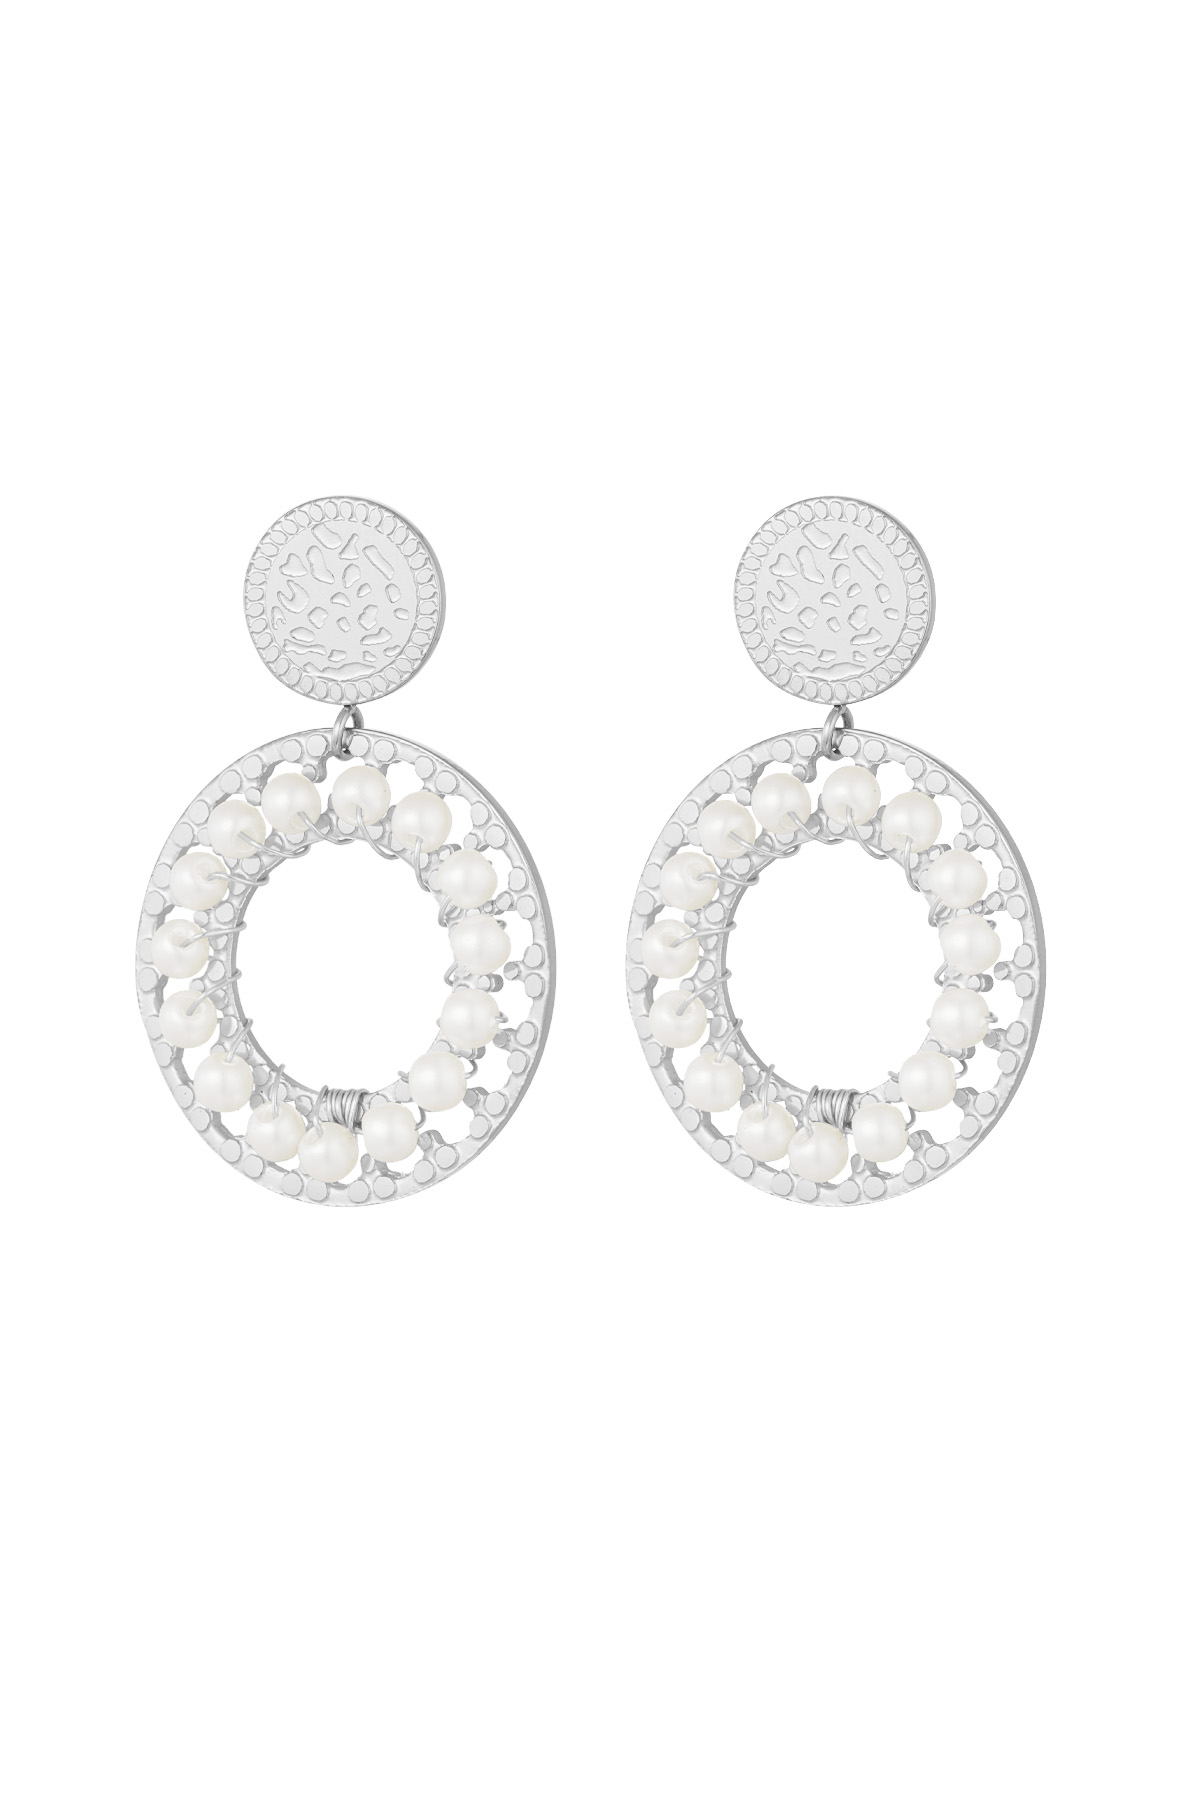 Doppelkreis-Ohrringe mit Perlen – Silber